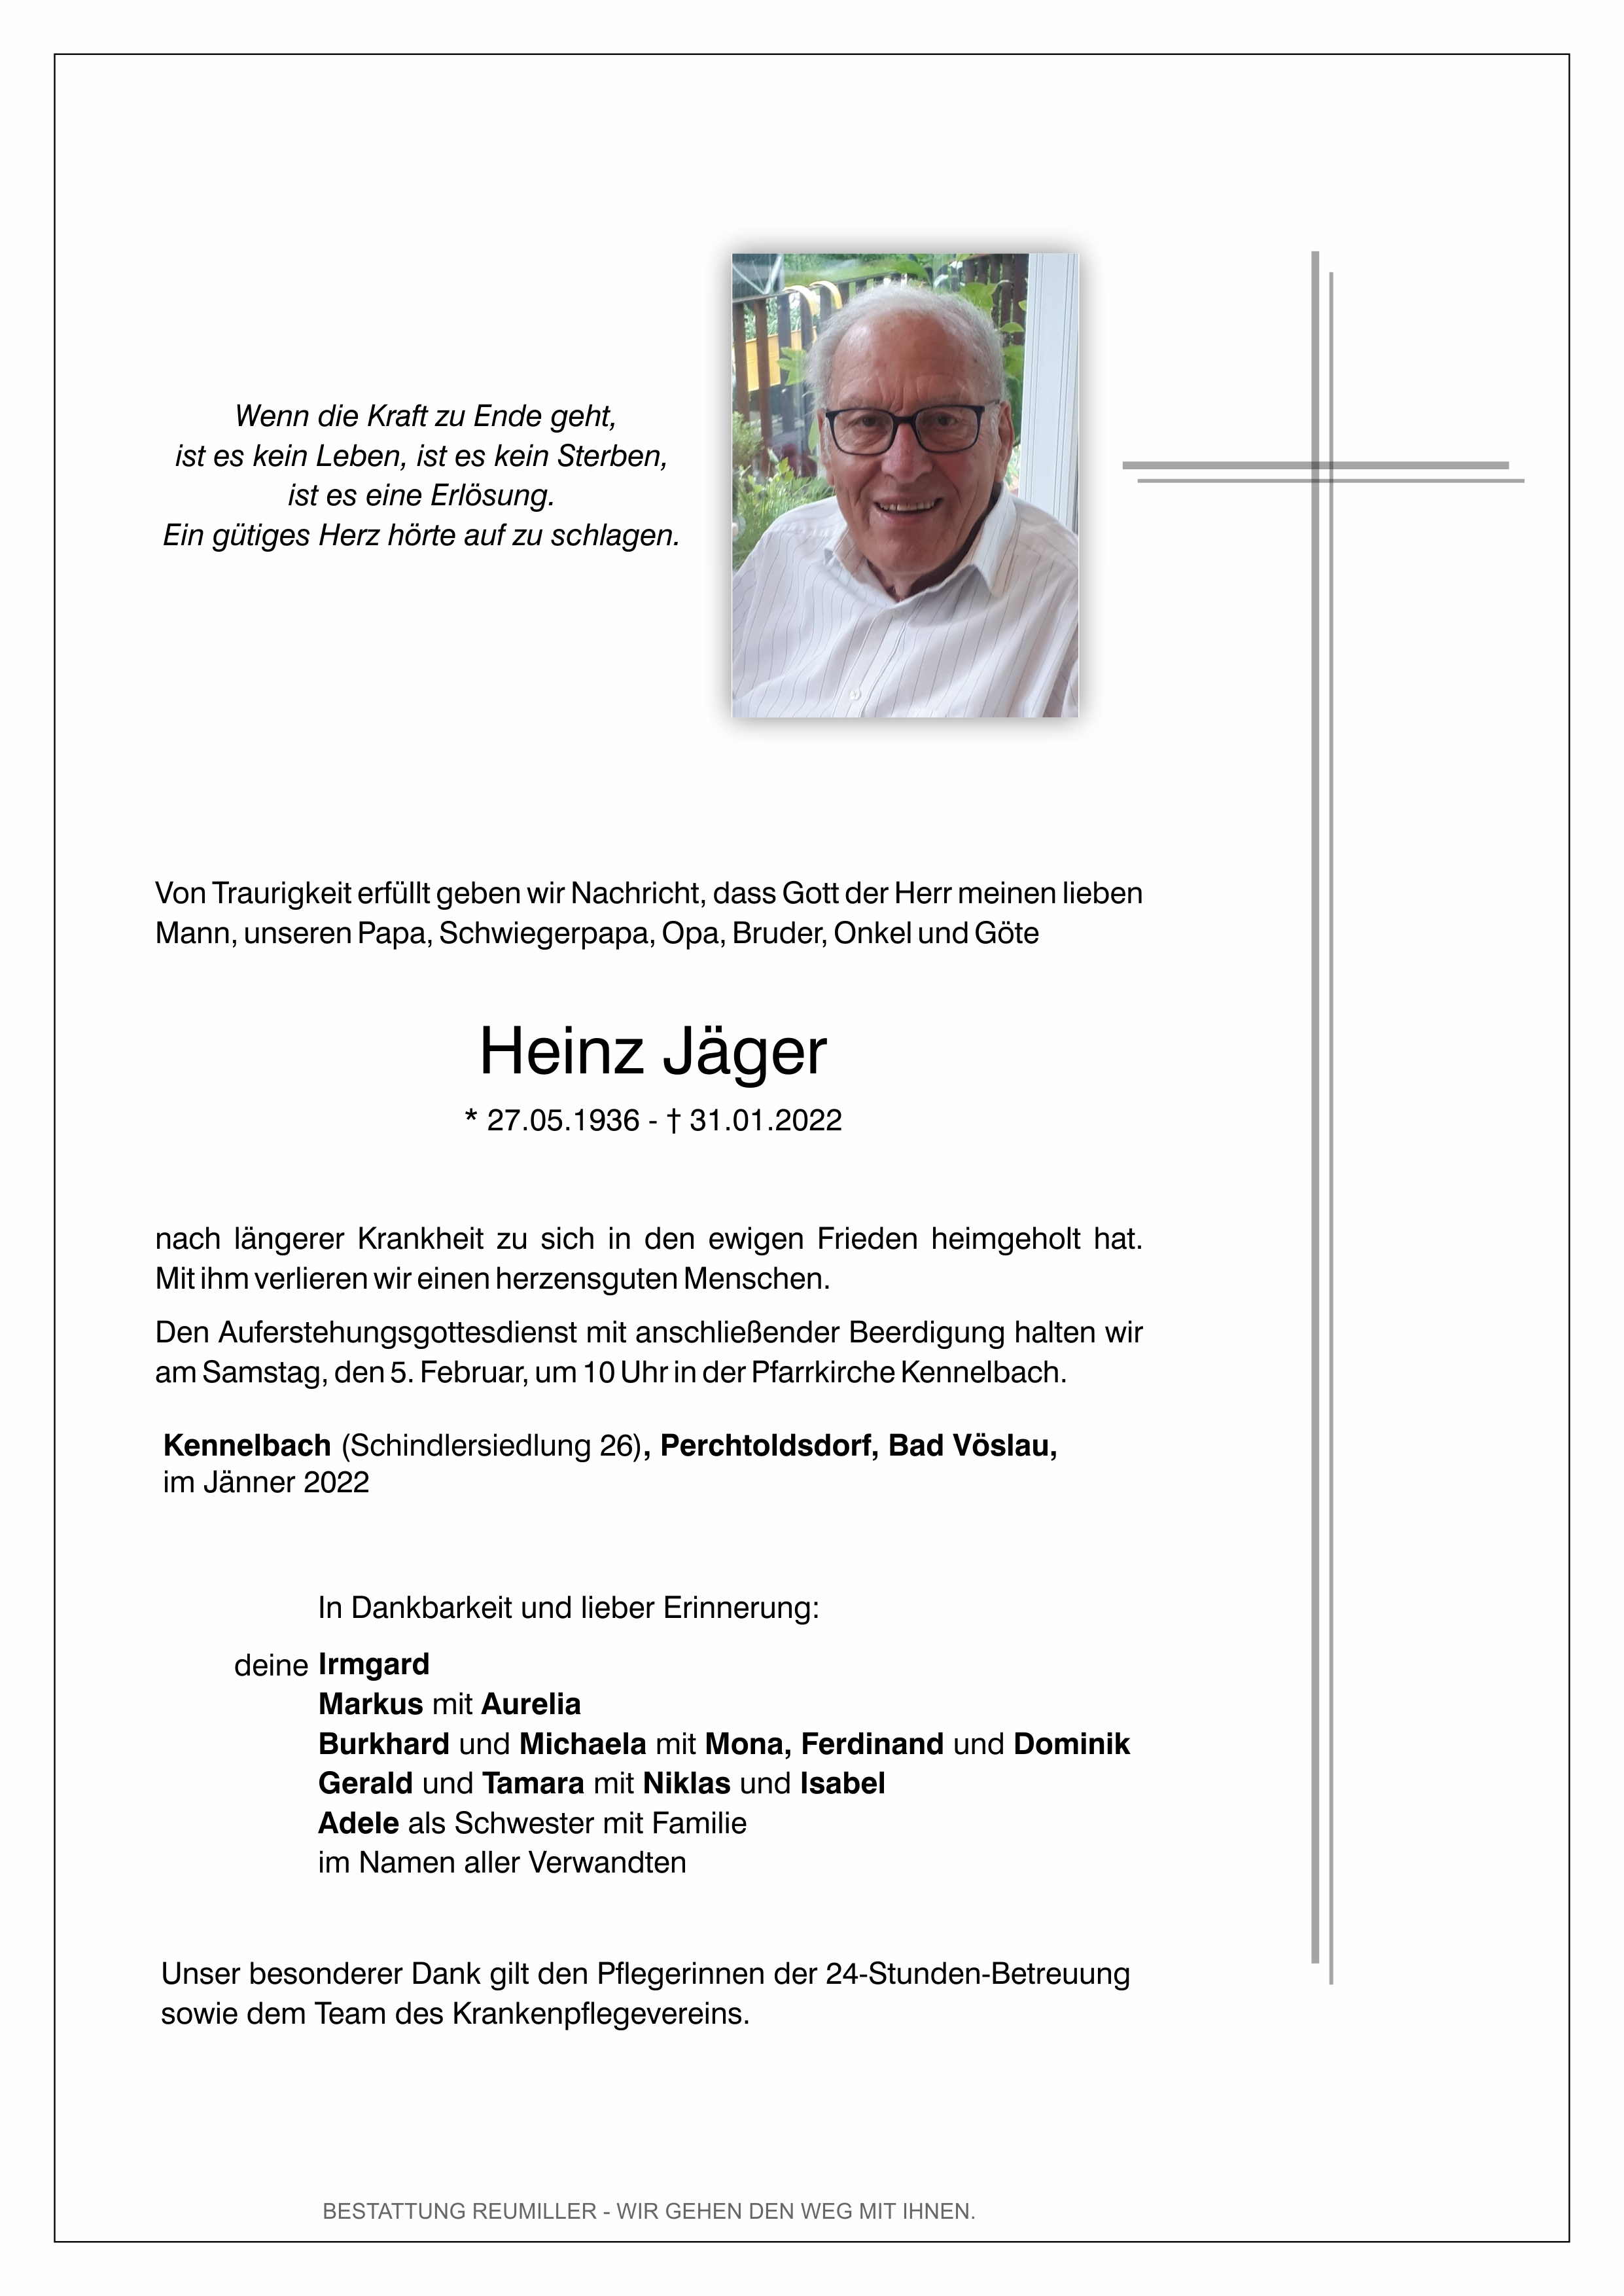 Heinz Jäger